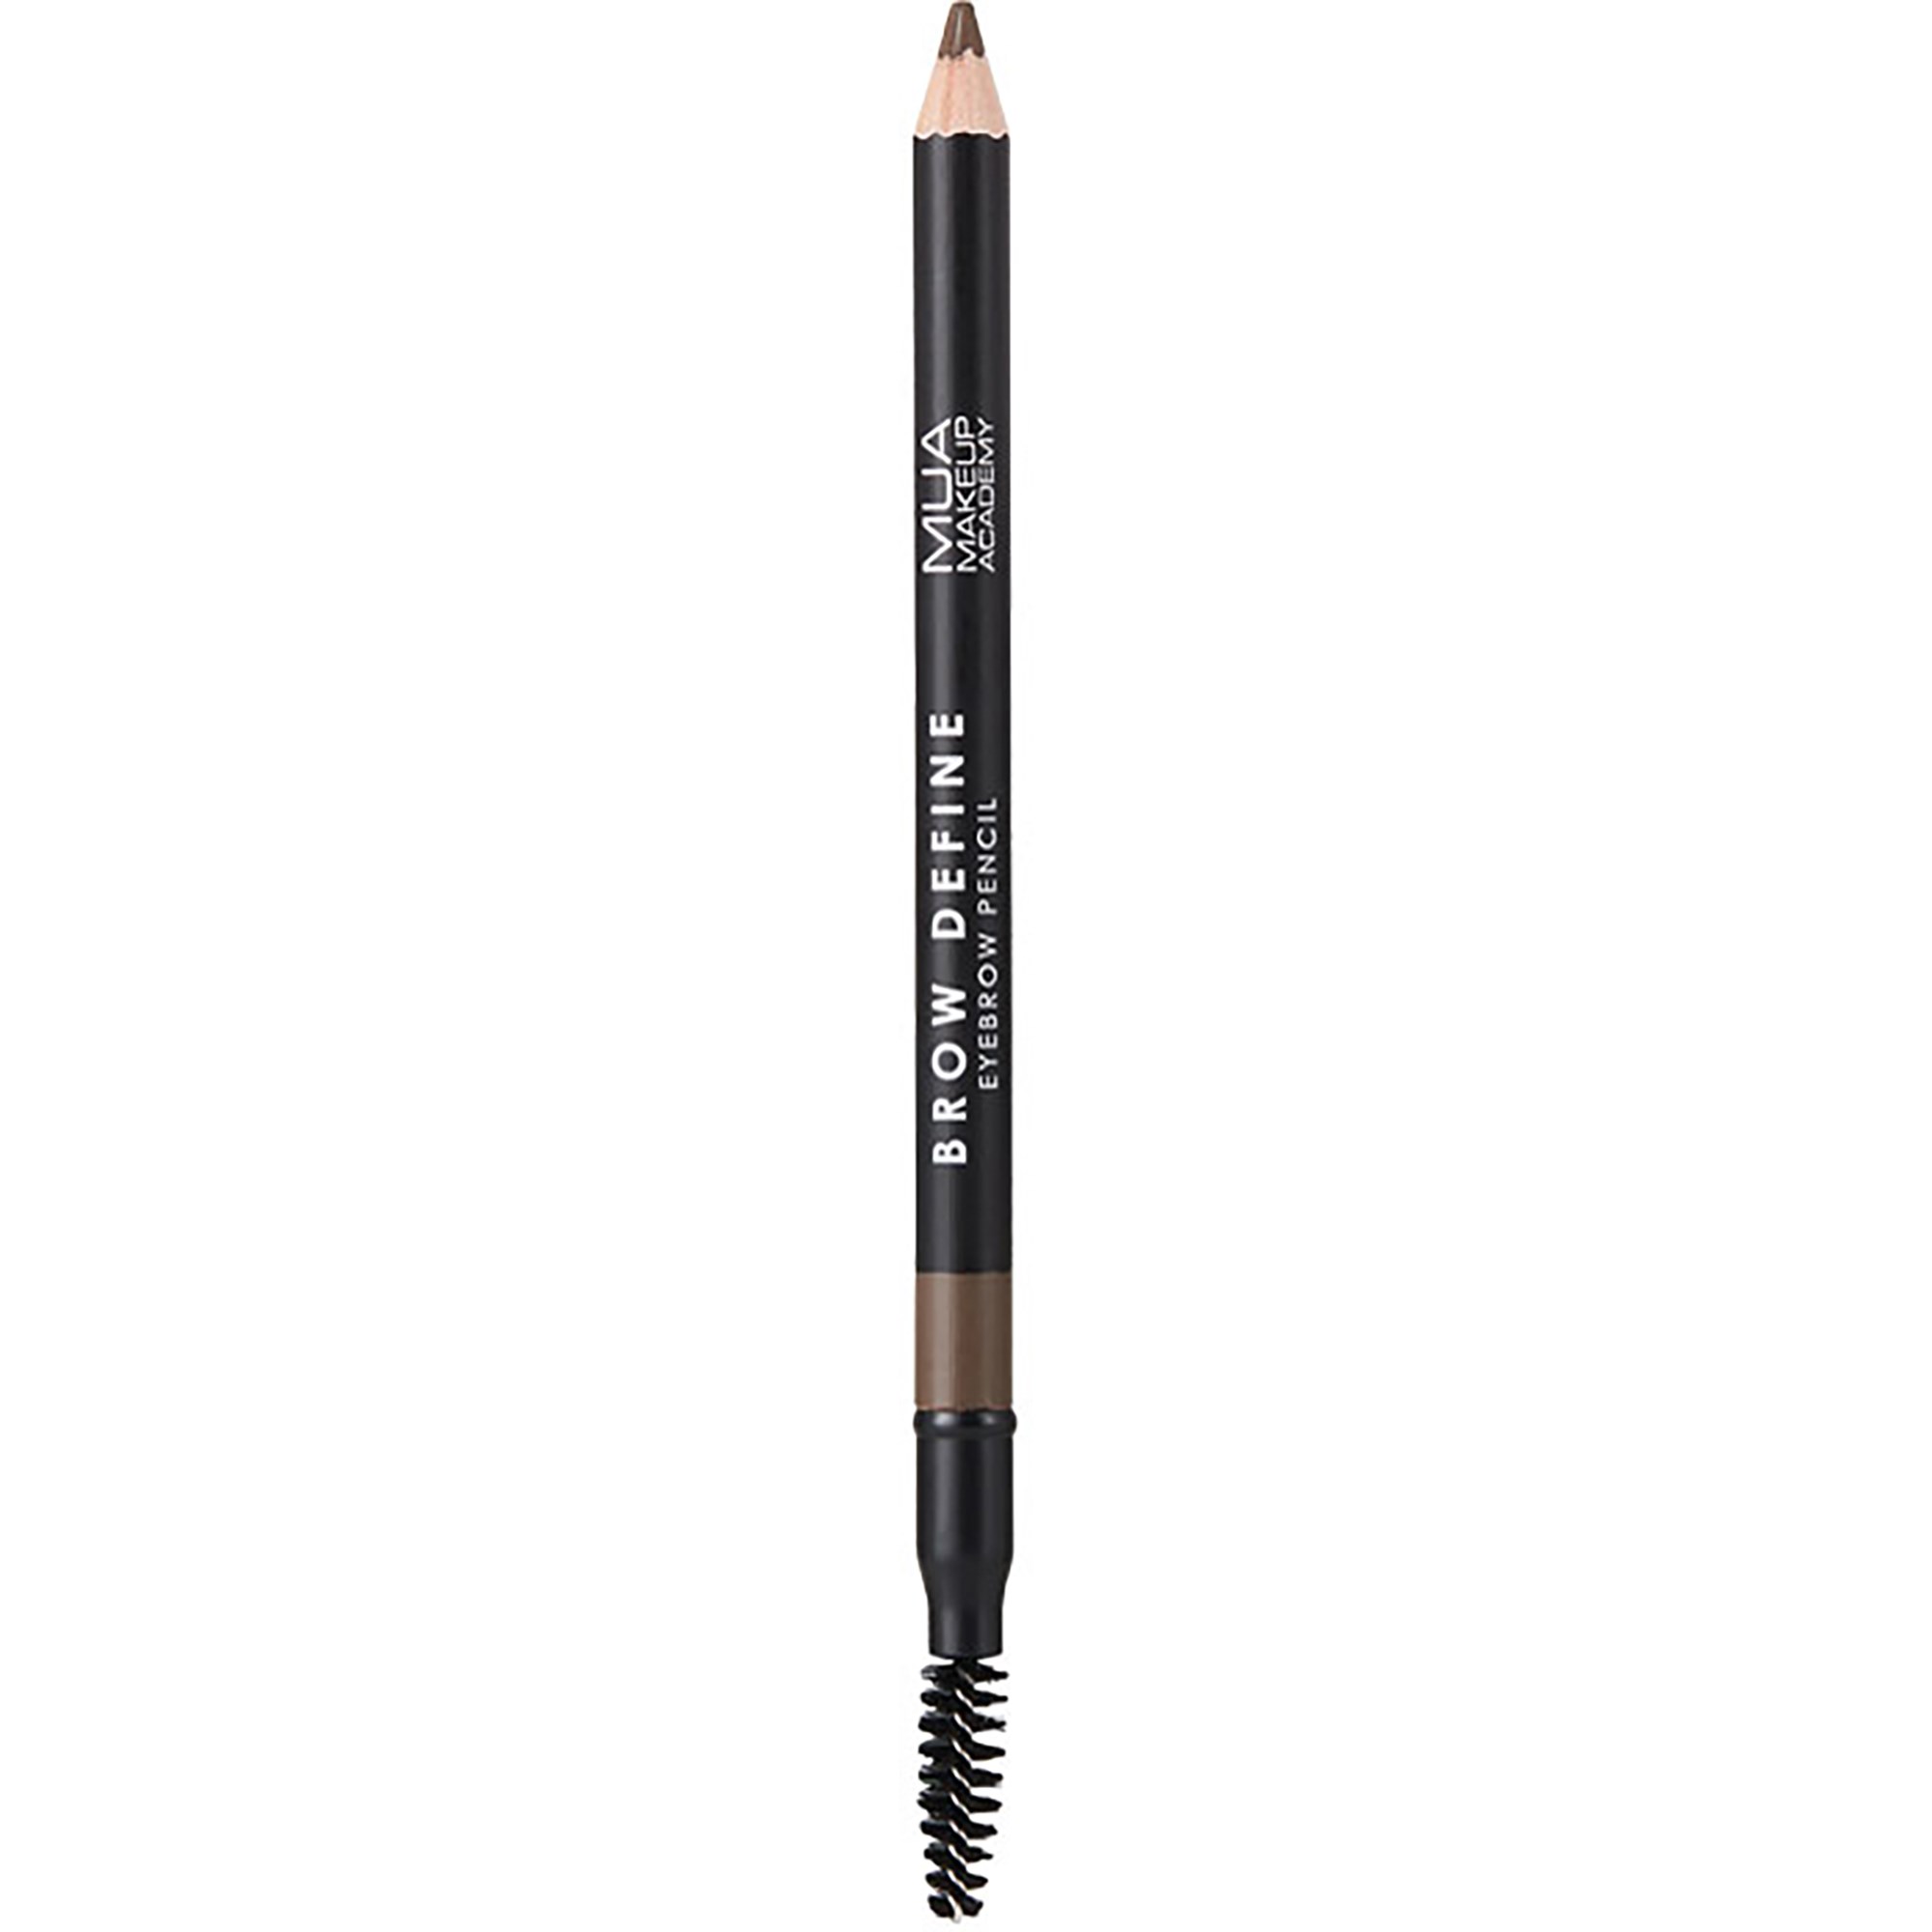 Makeup Academy Brow Define Eyebrow Pencil Mid Brown